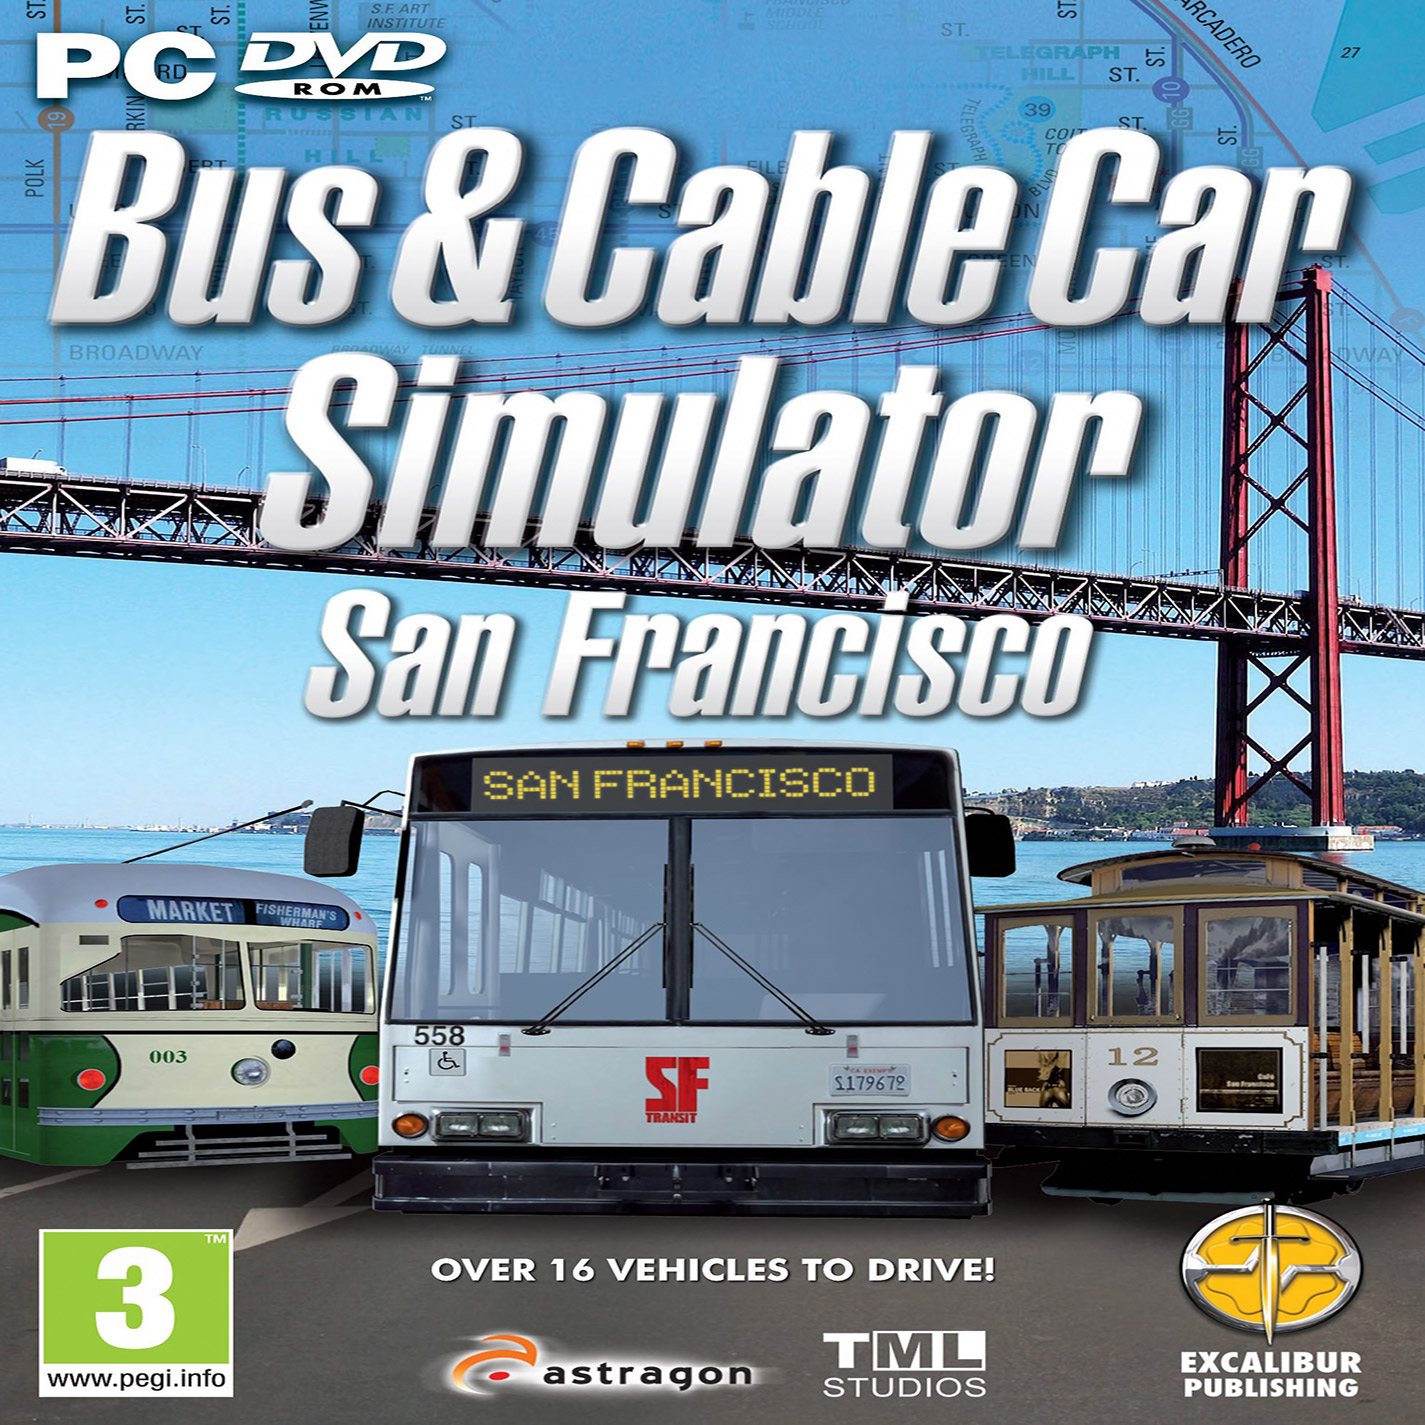 Bus & Cable Car Simulator - San Francisco - pedn CD obal